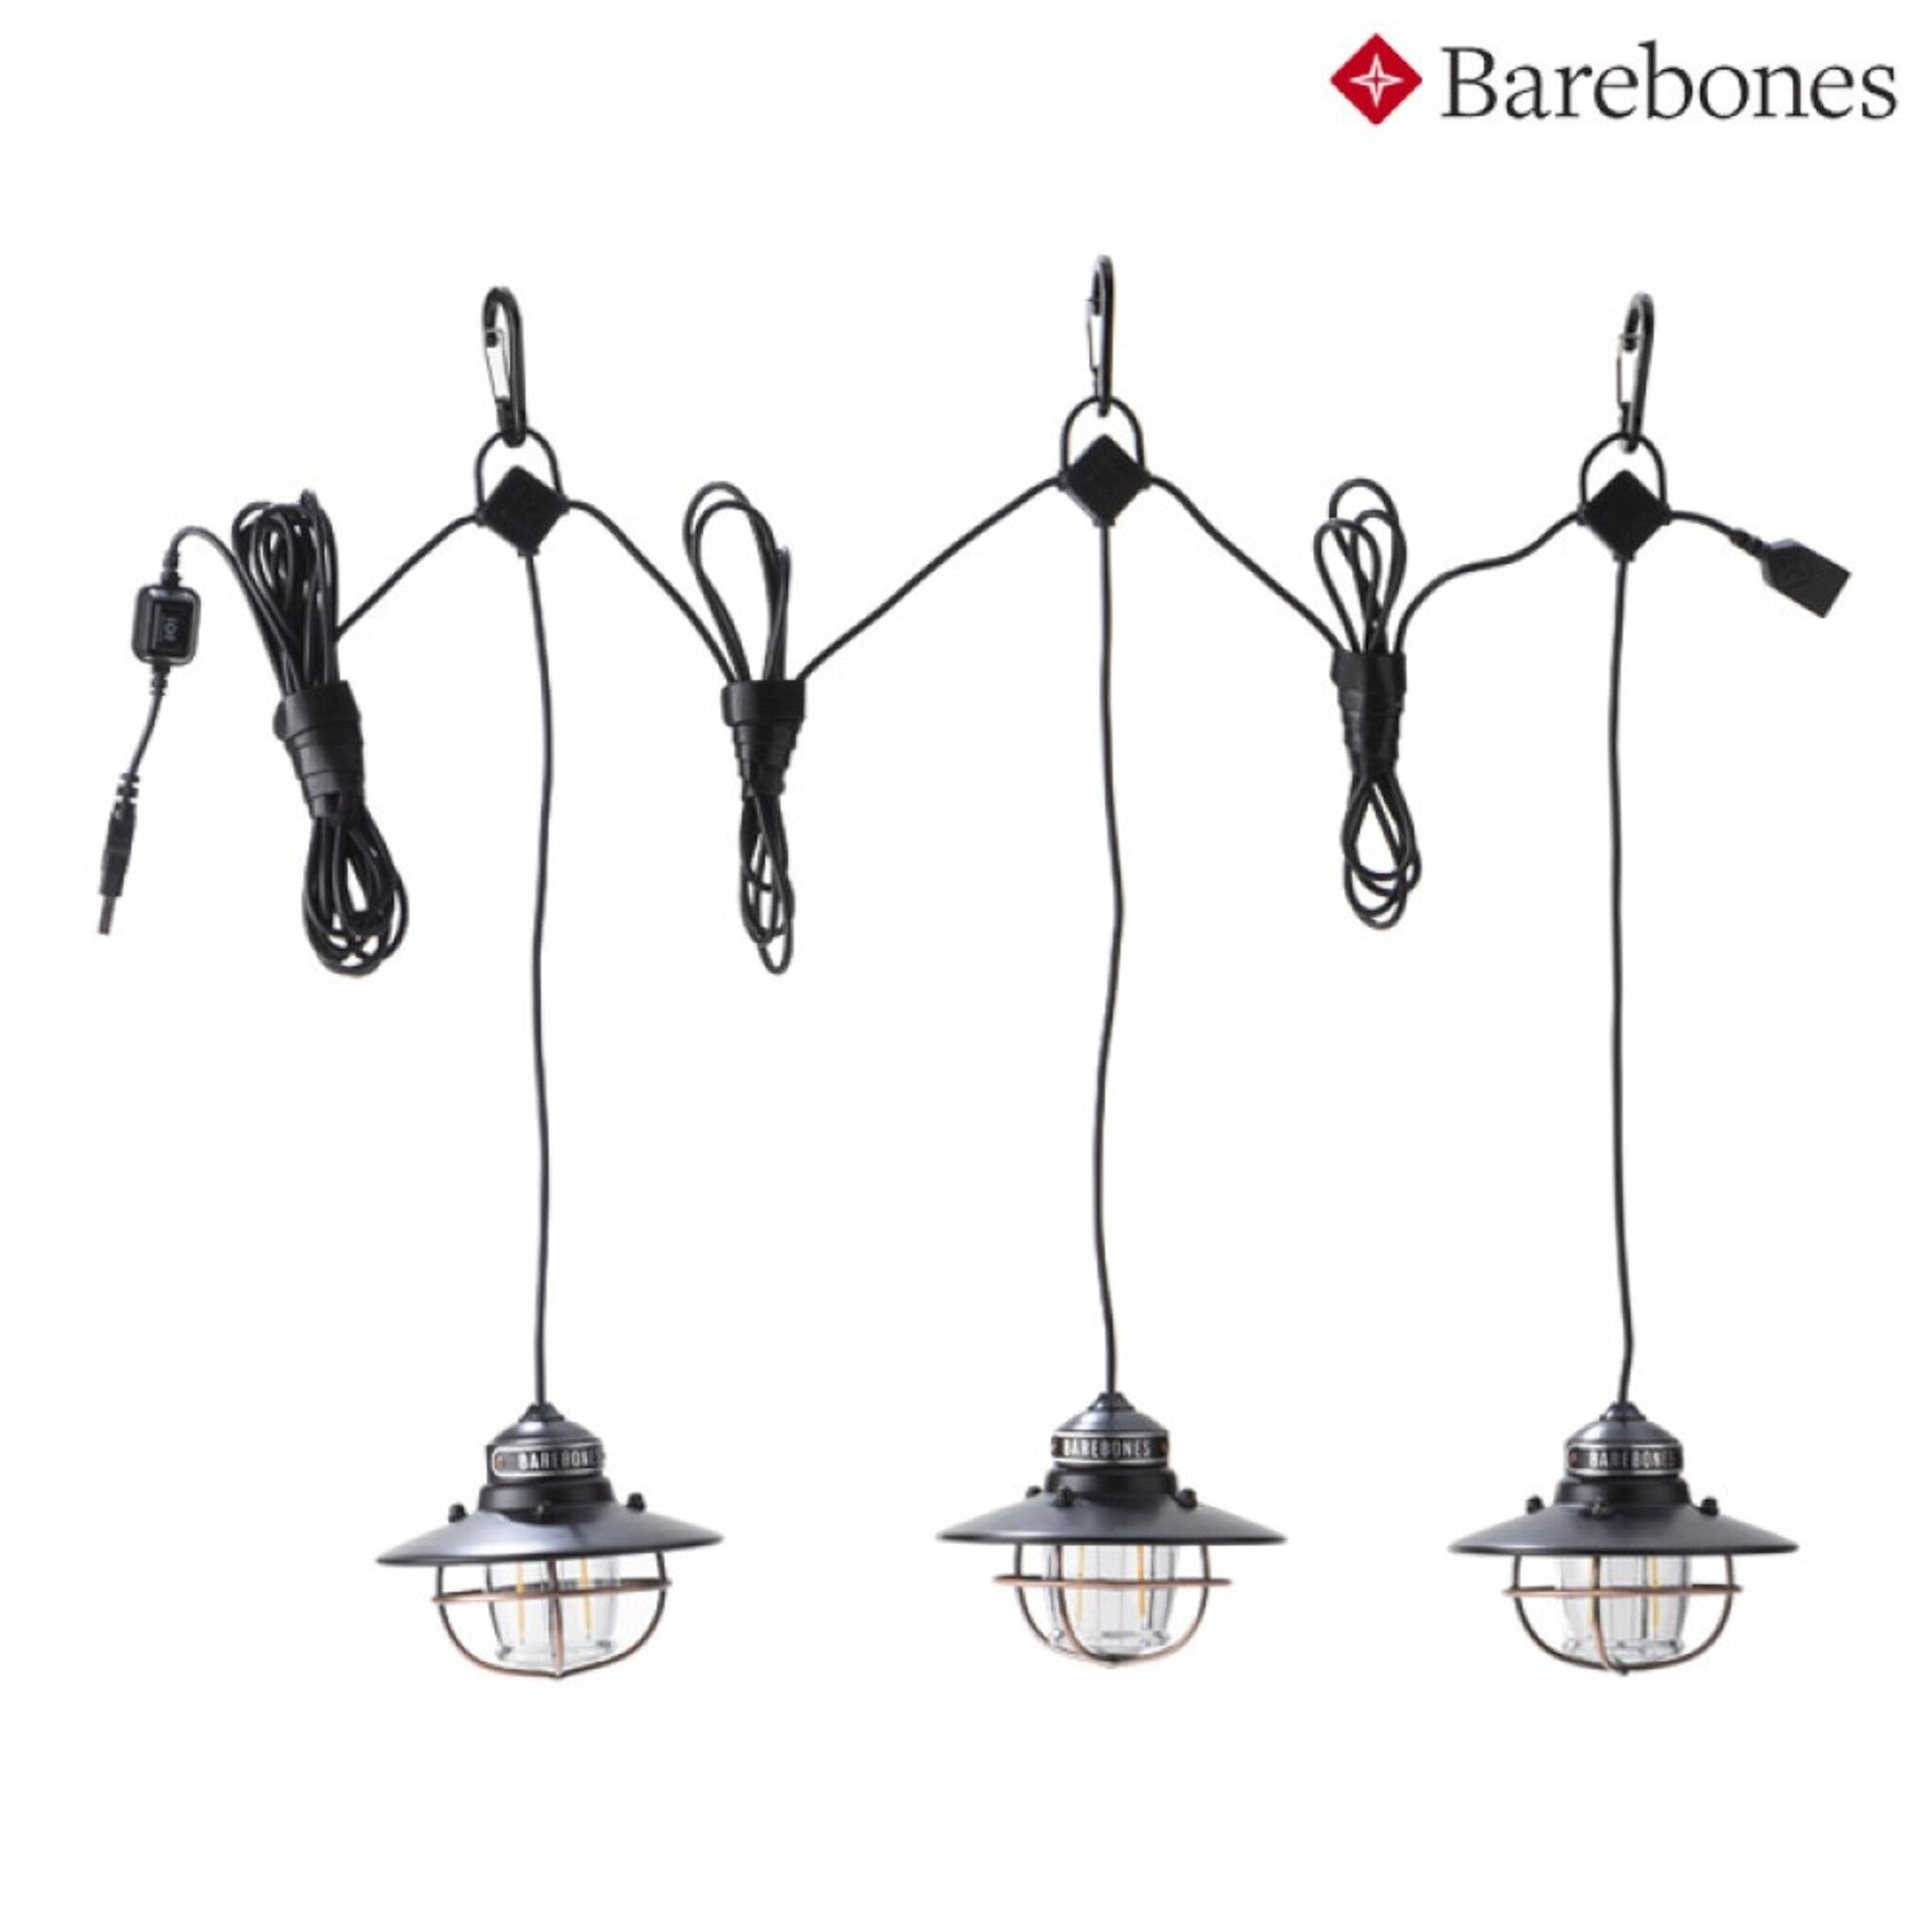 Barebones Edison String Lights 串連垂吊營燈 霧黑 LIV-265